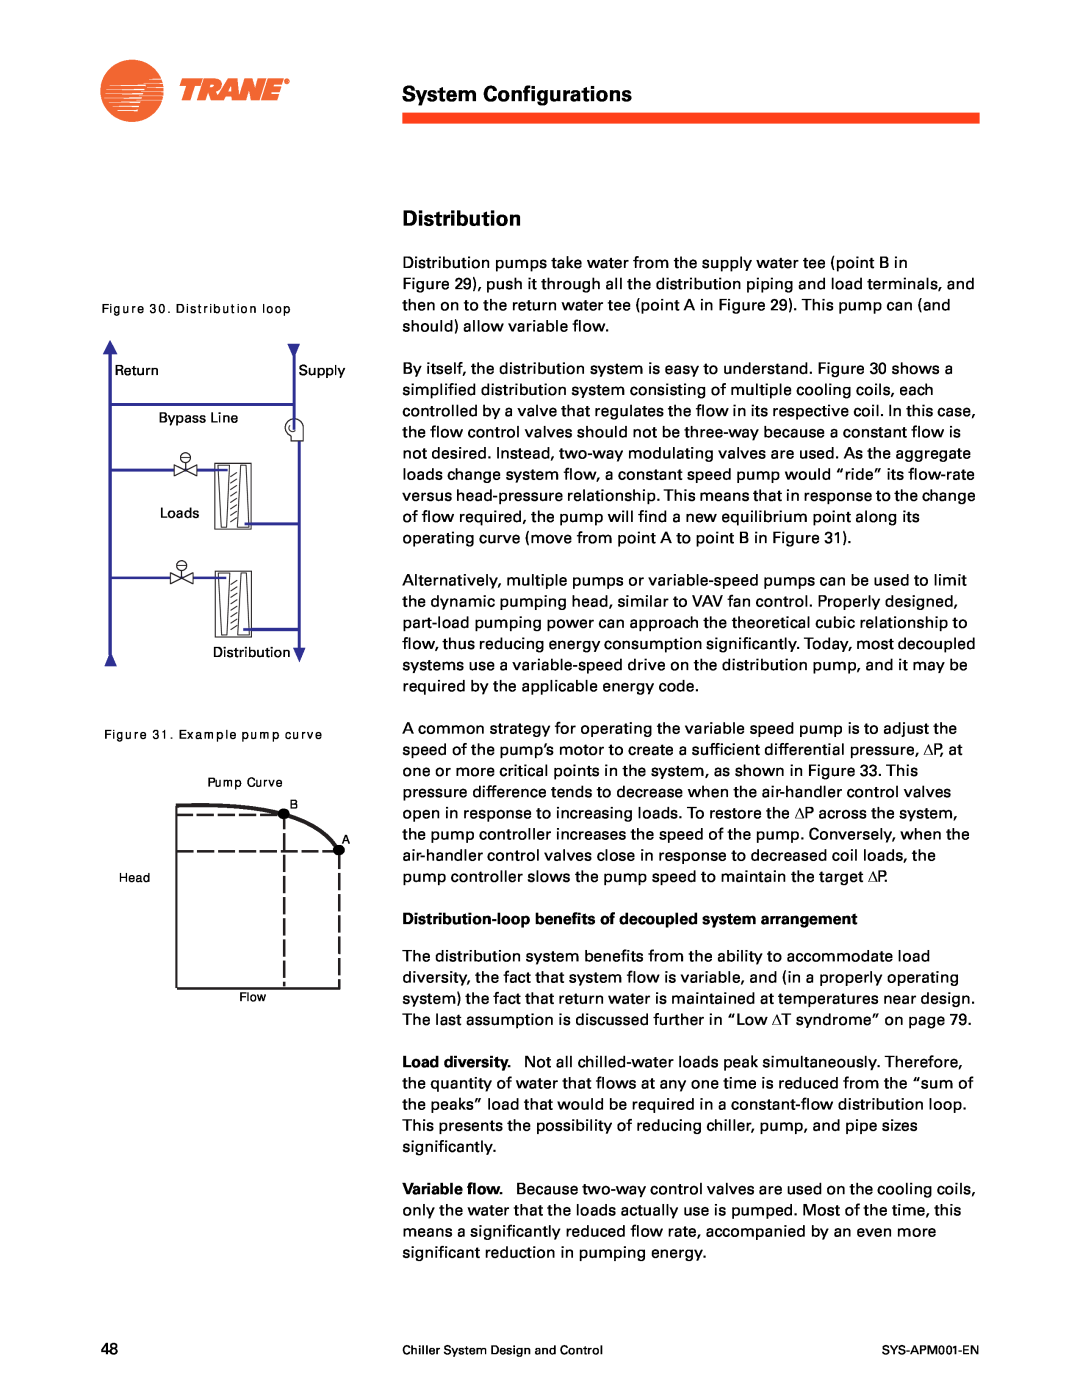 Trane SYS-APM001-EN manual System Configurations Distribution, Distribution-loop benefits of decoupled system arrangement 